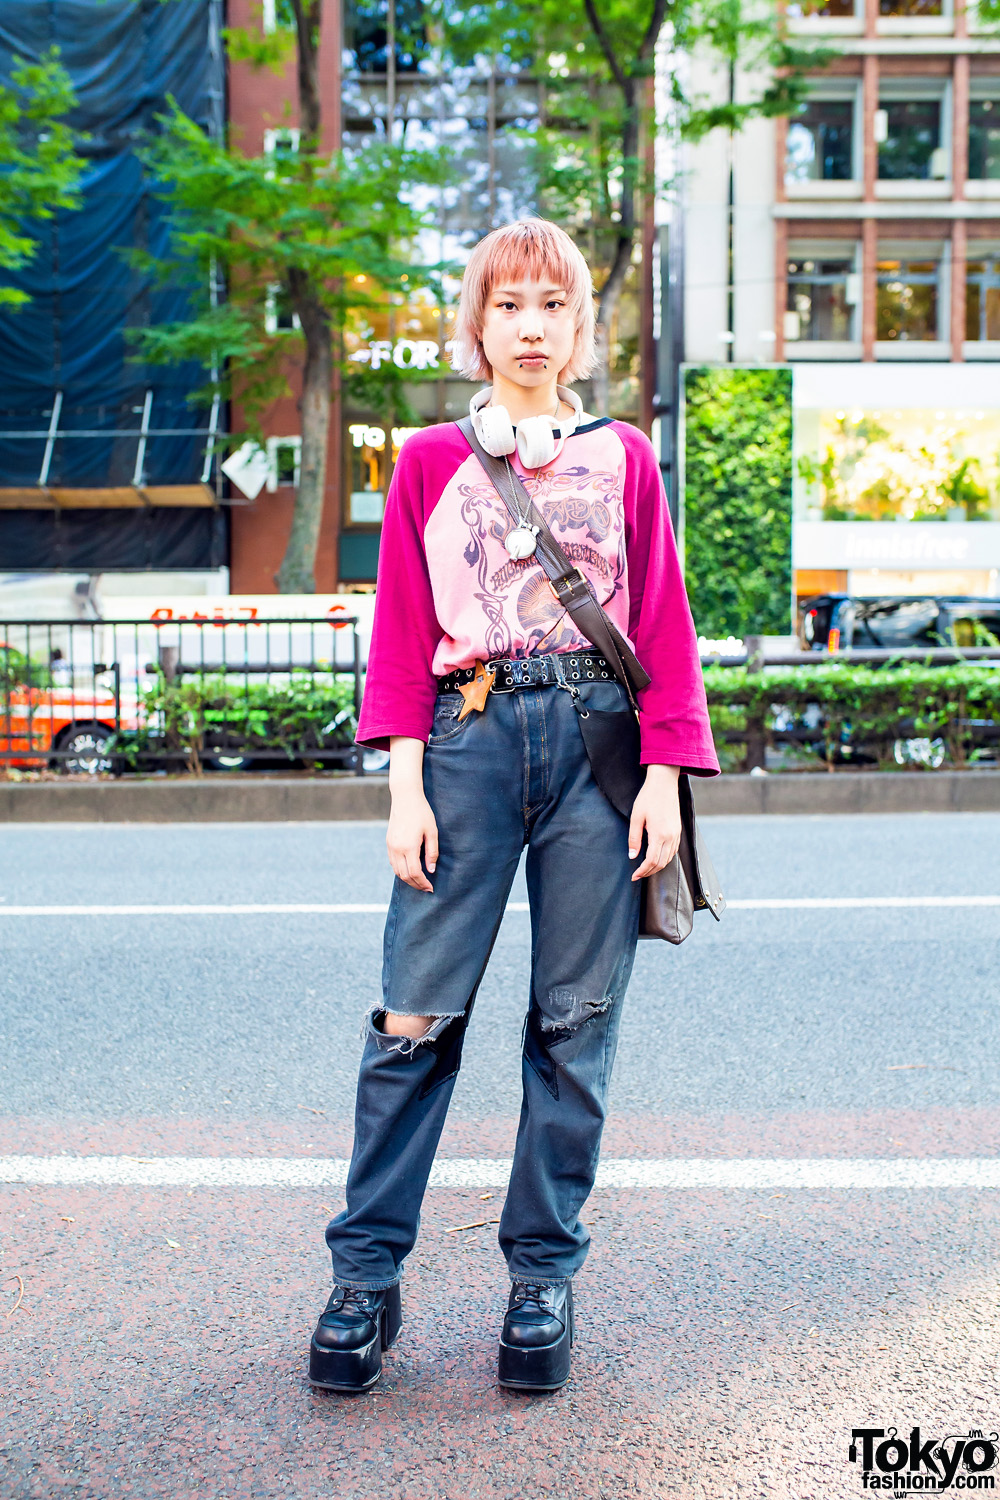 Harajuku Street Style w/ Peach Hair, Vivienne Westwood Flask Necklace, Raglan Shirt, Ripped Jeans, 8(eight) & Demonia Platforms